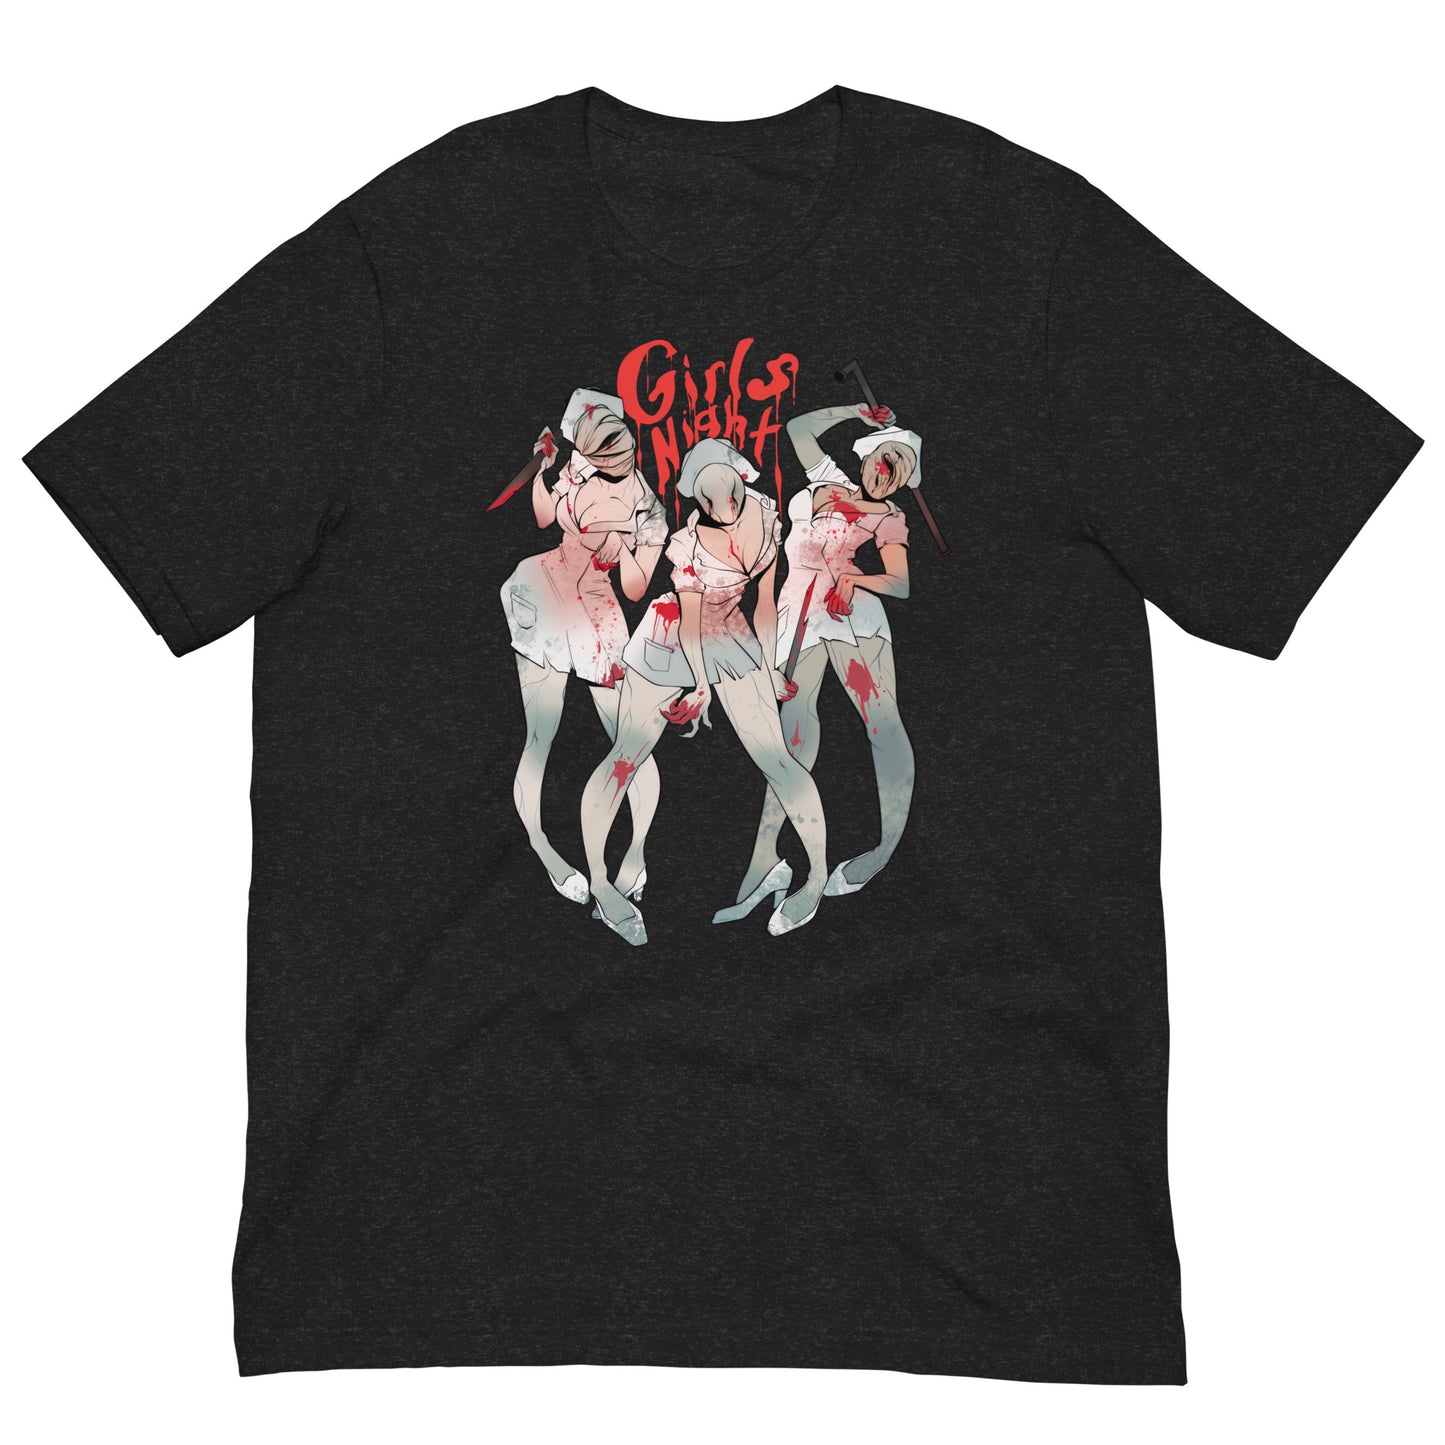 Girls Night Unisex t-shirt